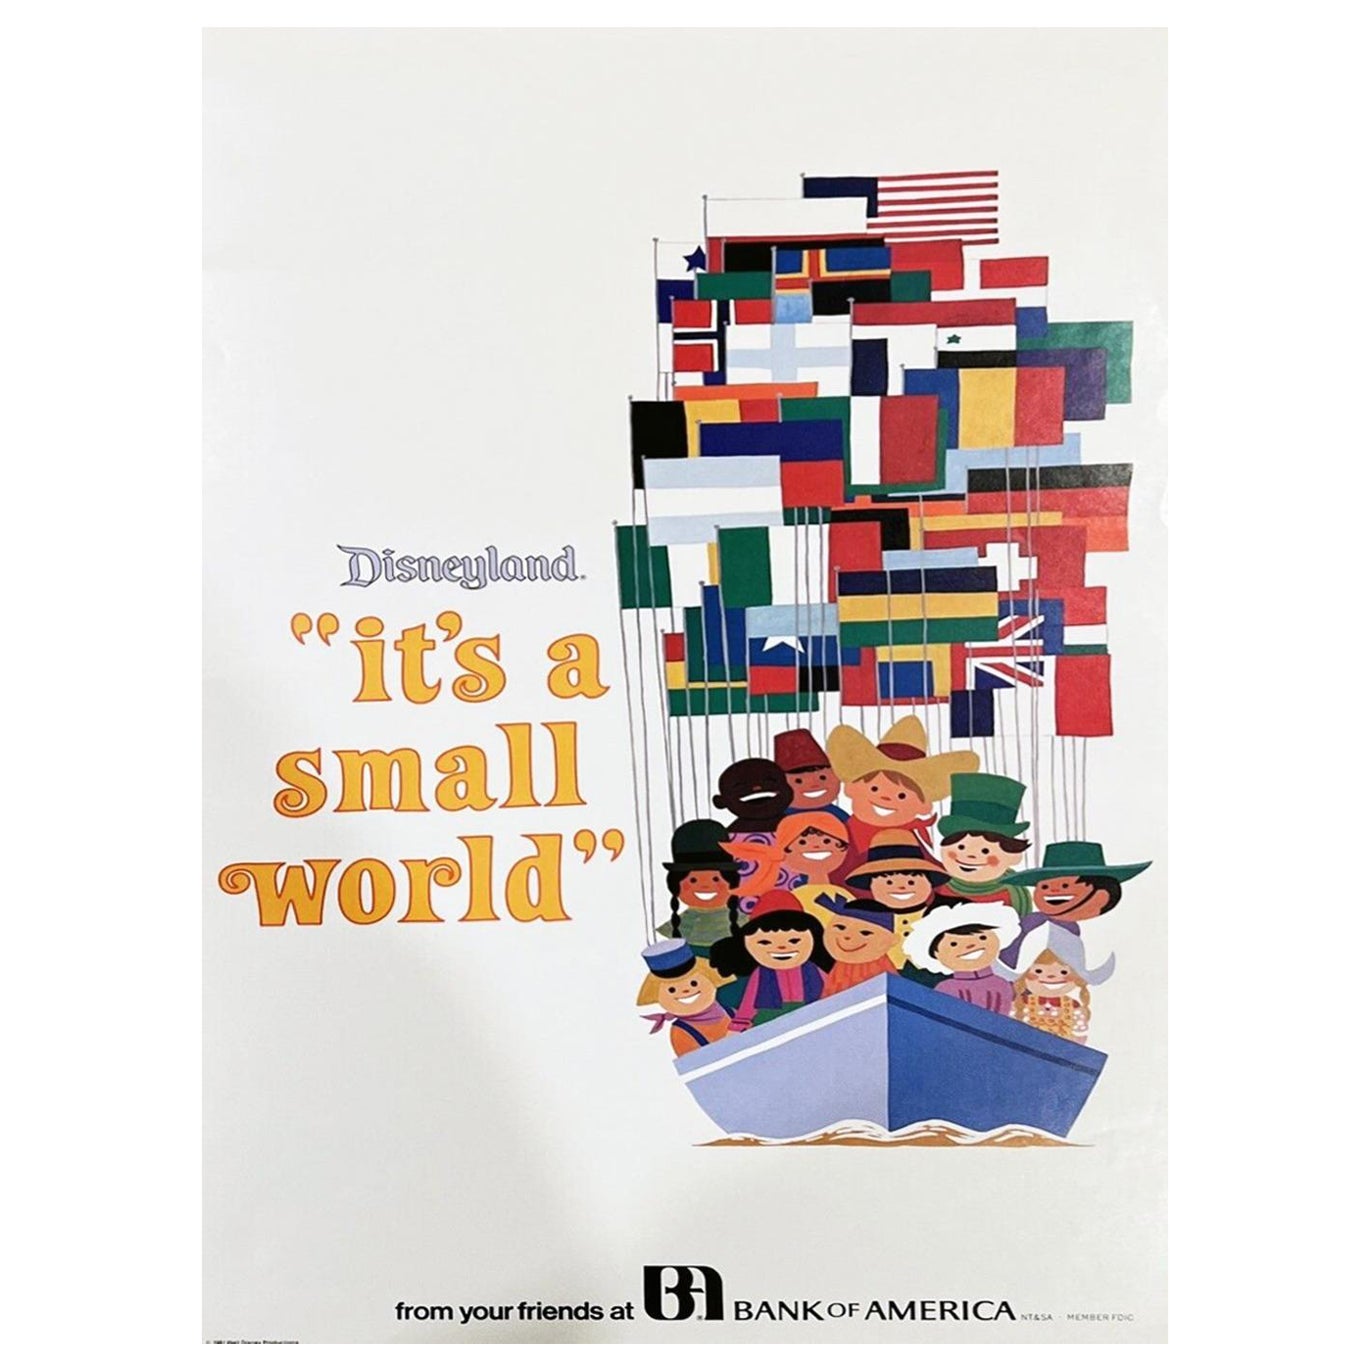 1981 Disneyland - It's a Small World Original Vintage Poster